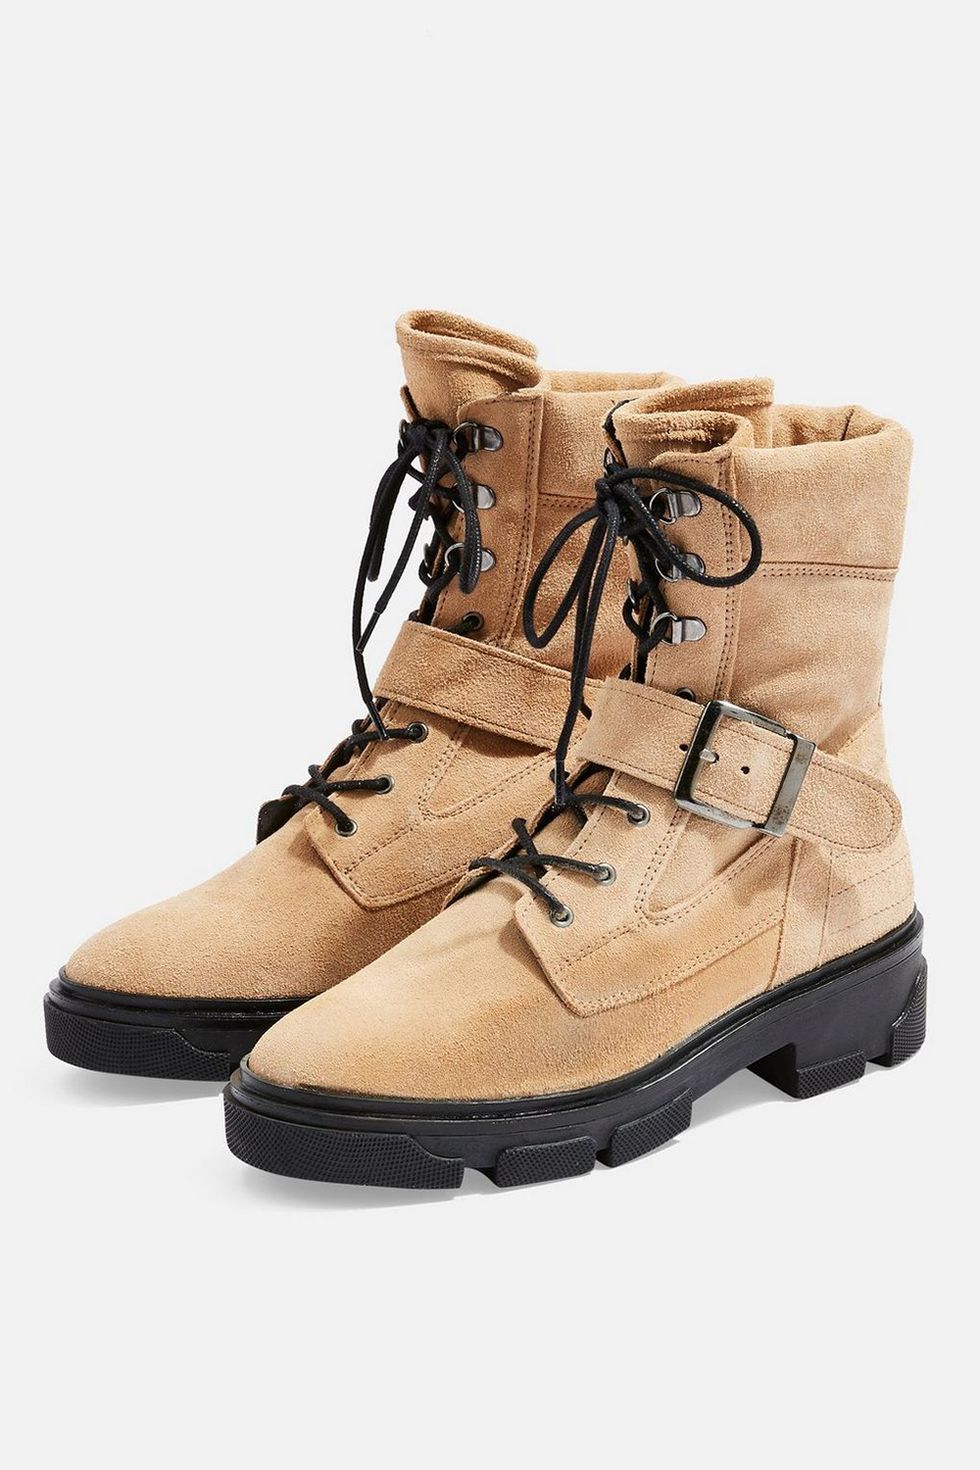 Footwear, Shoe, Boot, Brown, Beige, Hiking boot, Khaki, Tan, Snow boot, Work boots, 